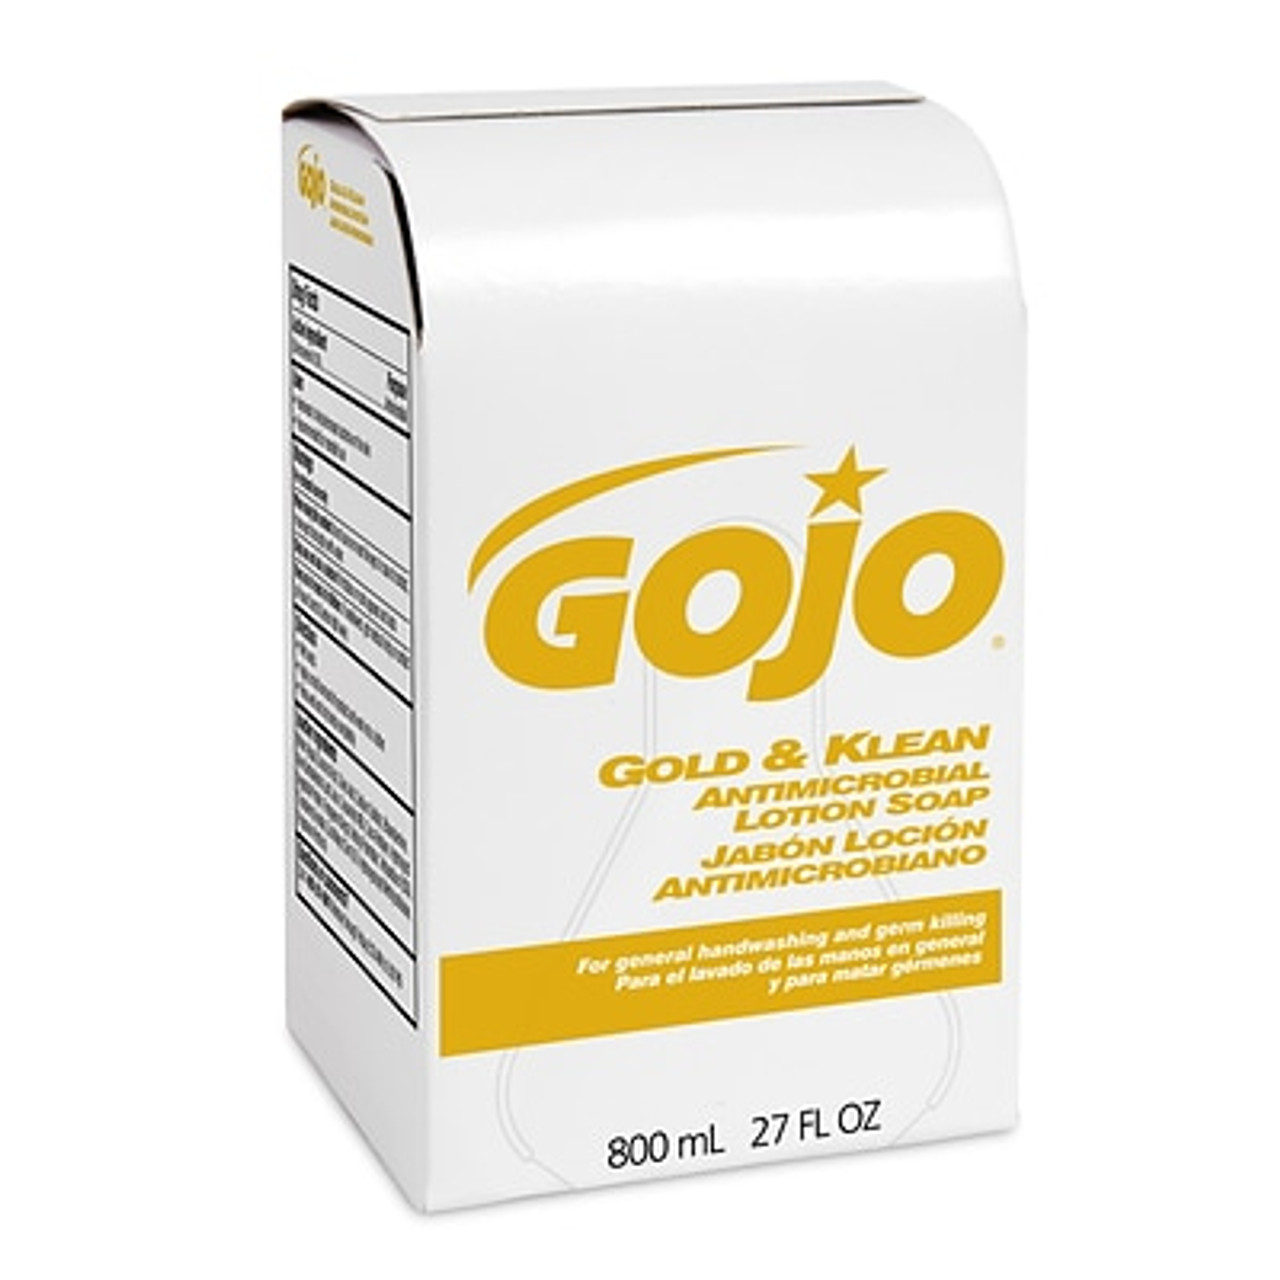 Gojo Gold & Klean Antimicrobial Lotion Soap 800 mL Refill for Bag-in-Box Dispenser, ea